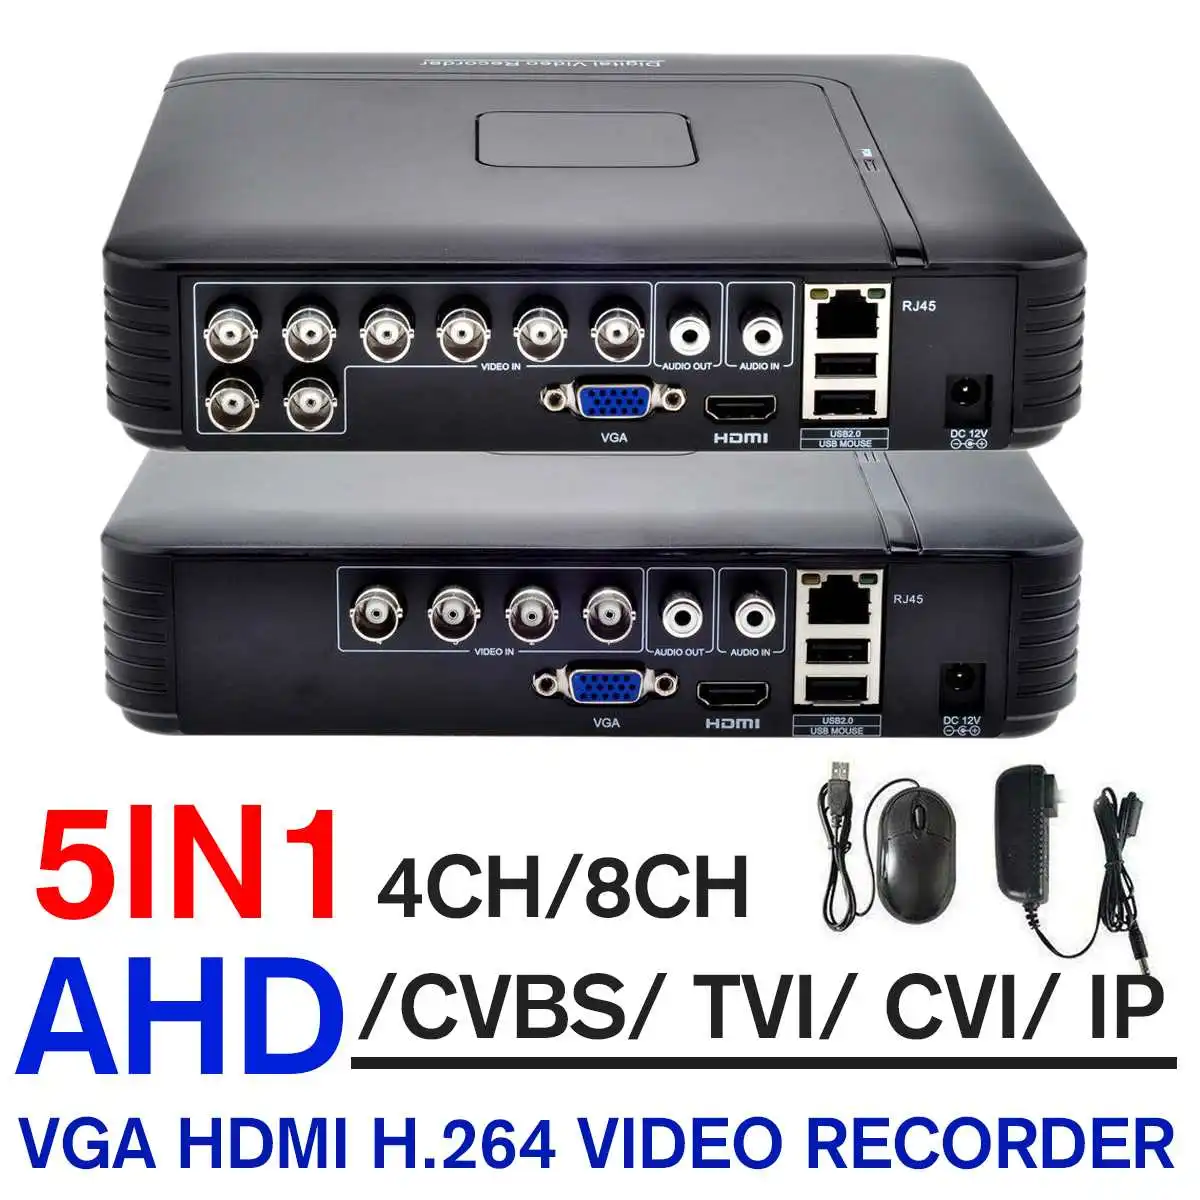 

NEW H.264 4CH 8CH 1080P 5 in 1 DVR Video Recorder for AHD Camera Analog Camera IP Camera P2P NVR CCTV System DVR VGA HDMI